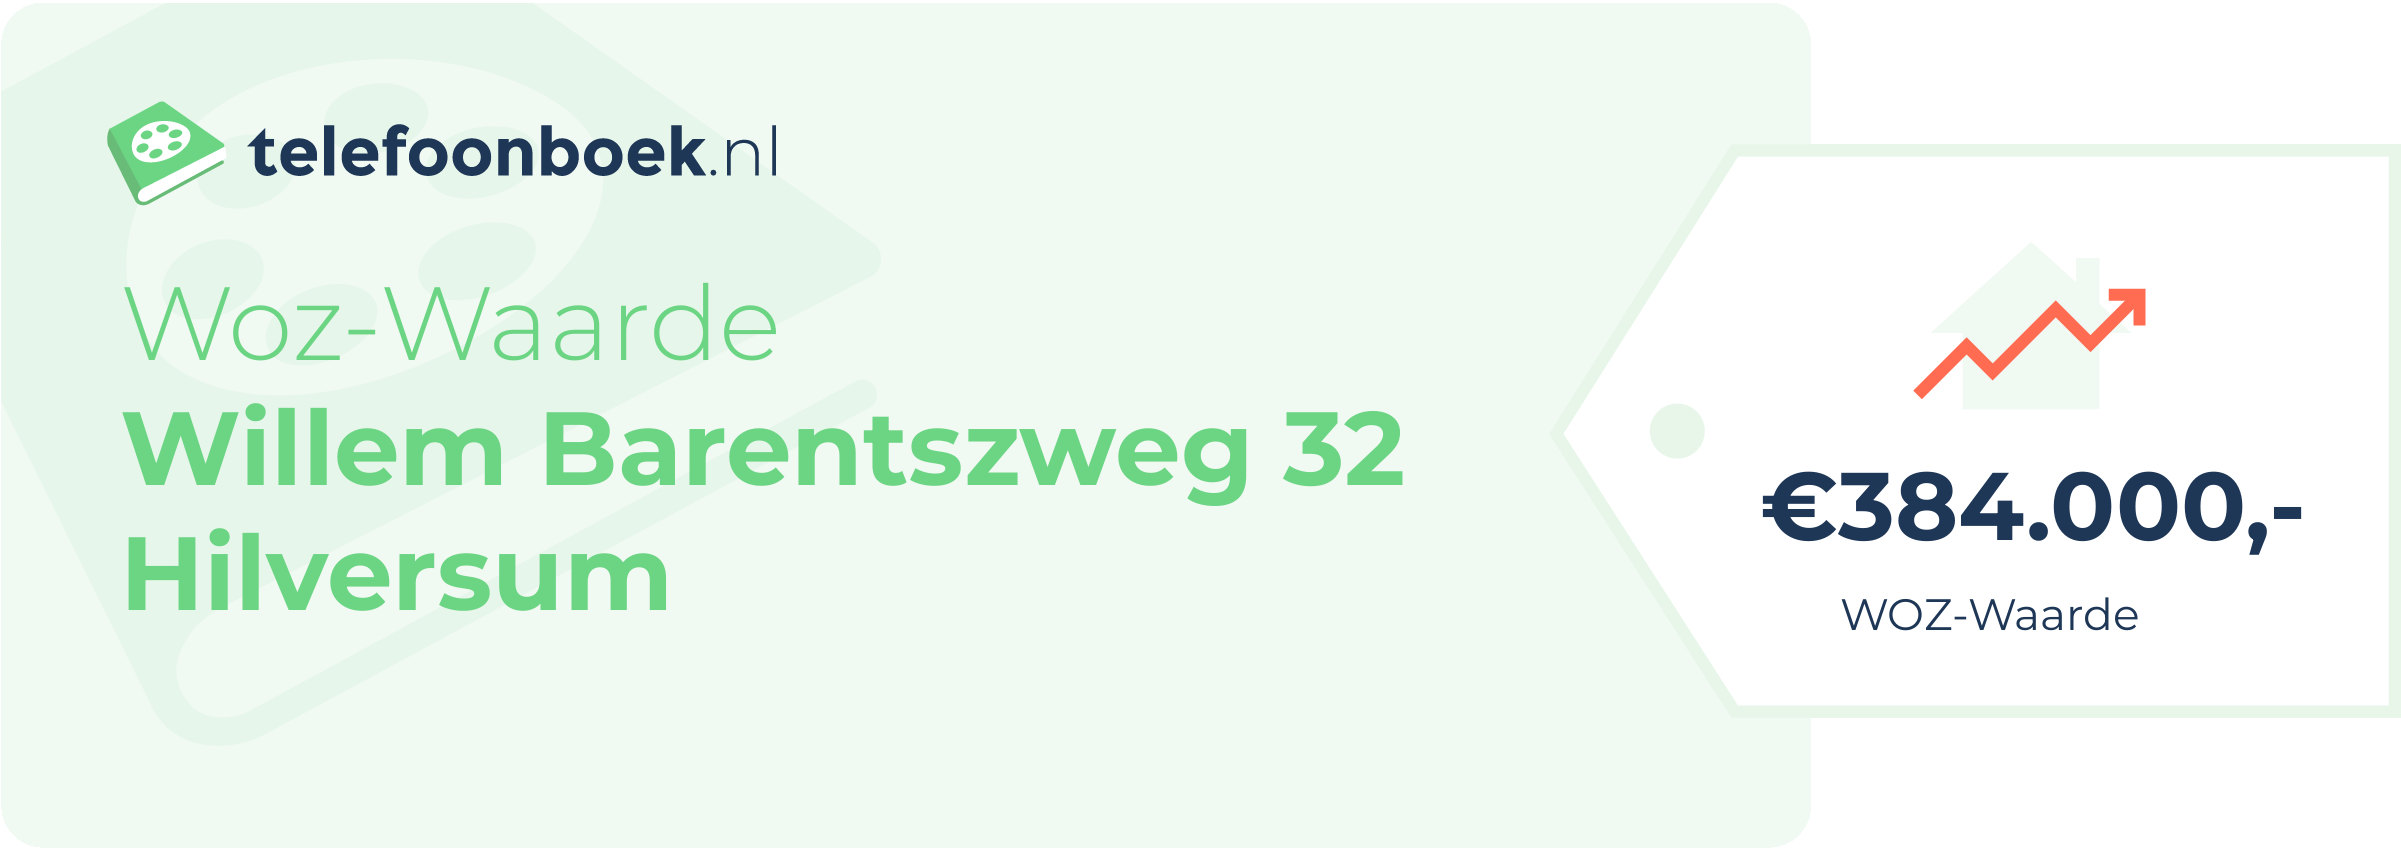 WOZ-waarde Willem Barentszweg 32 Hilversum